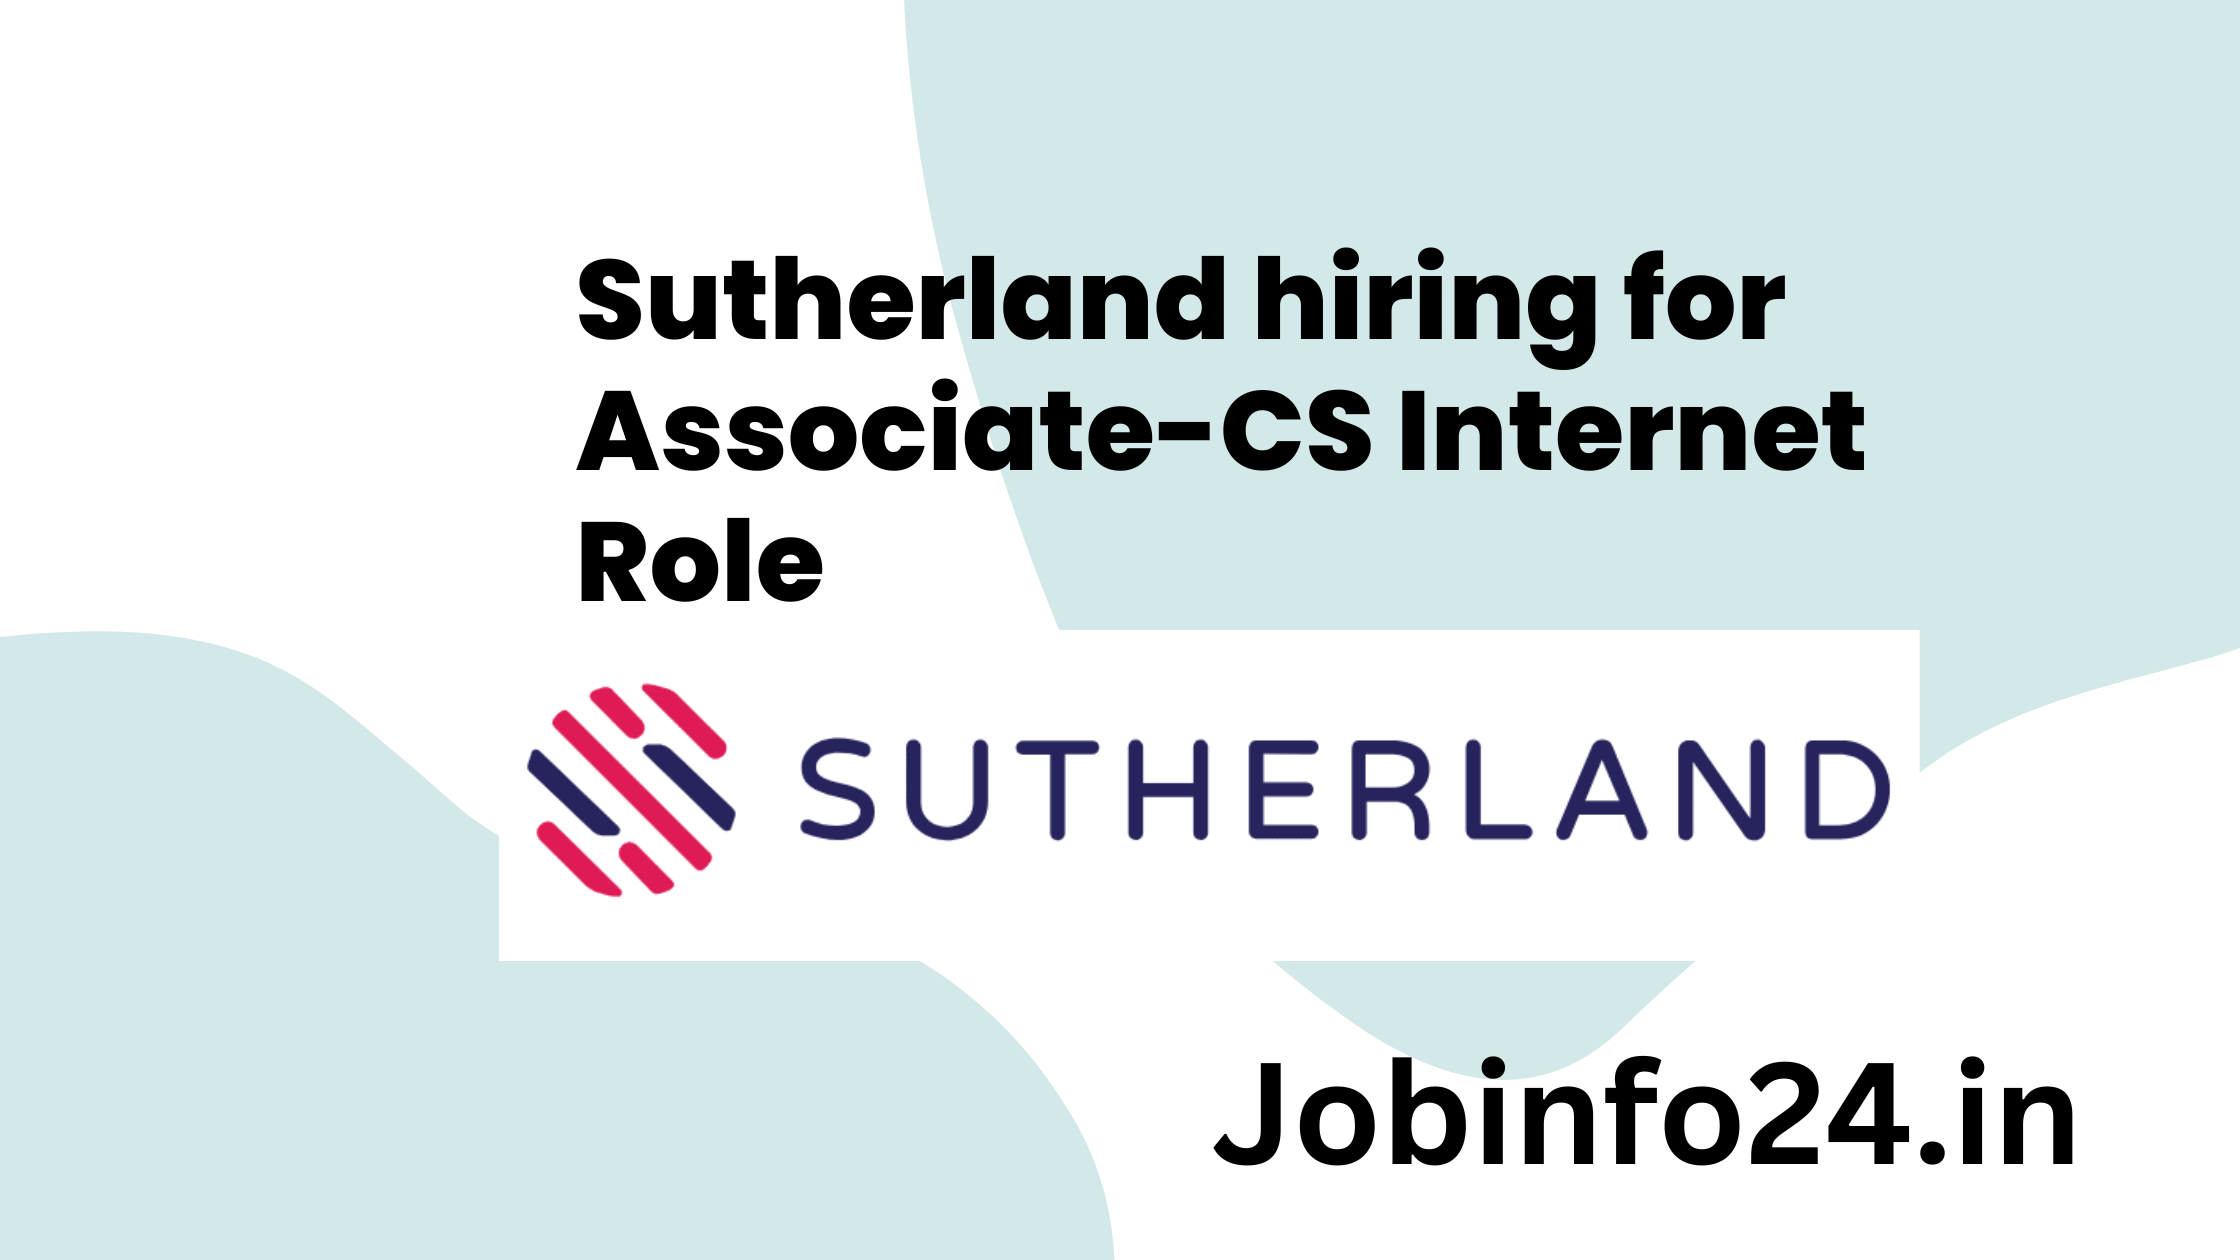 Sutherland hiring for Associate-CS Internet Role